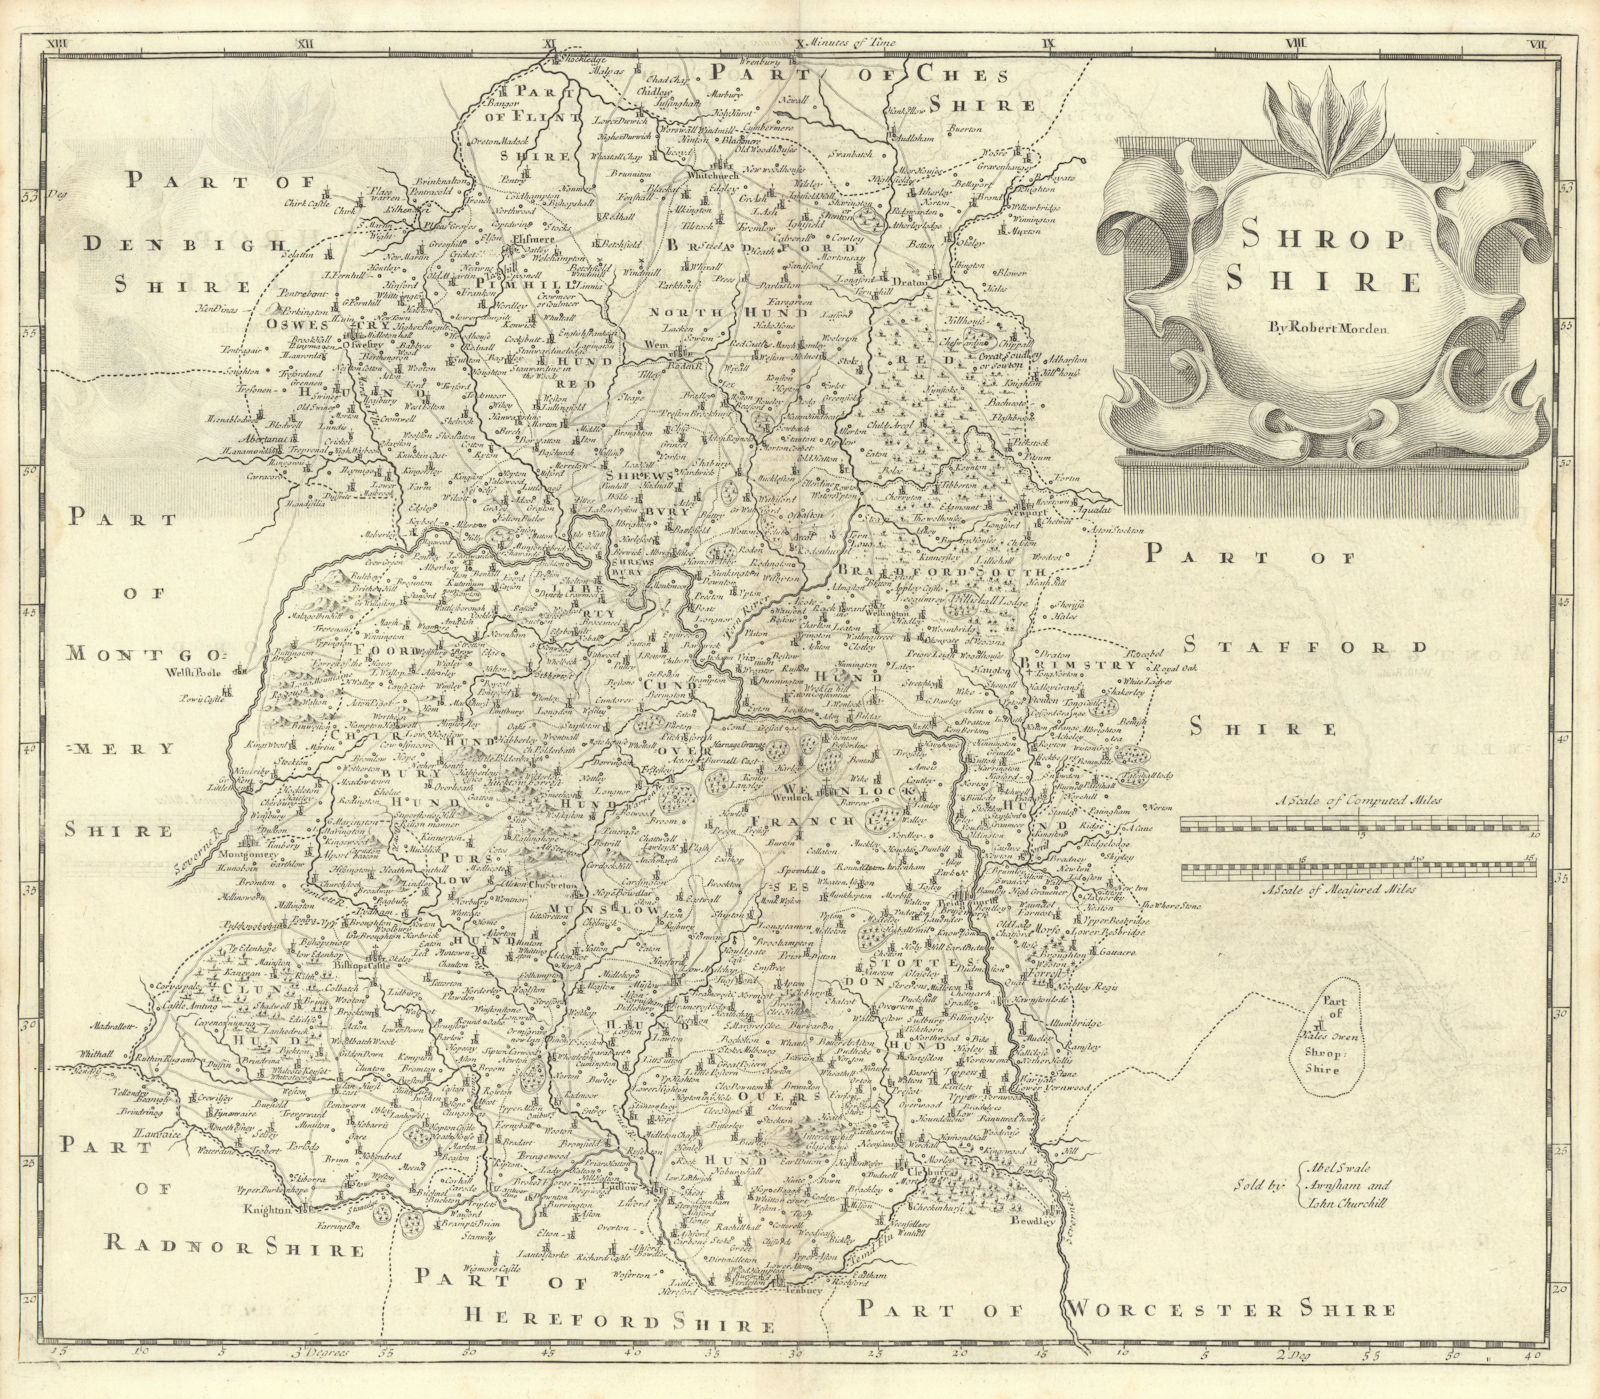 Shropshire. 'SHROP SHIRE' by ROBERT MORDEN from Camden's Britannia 1722 map